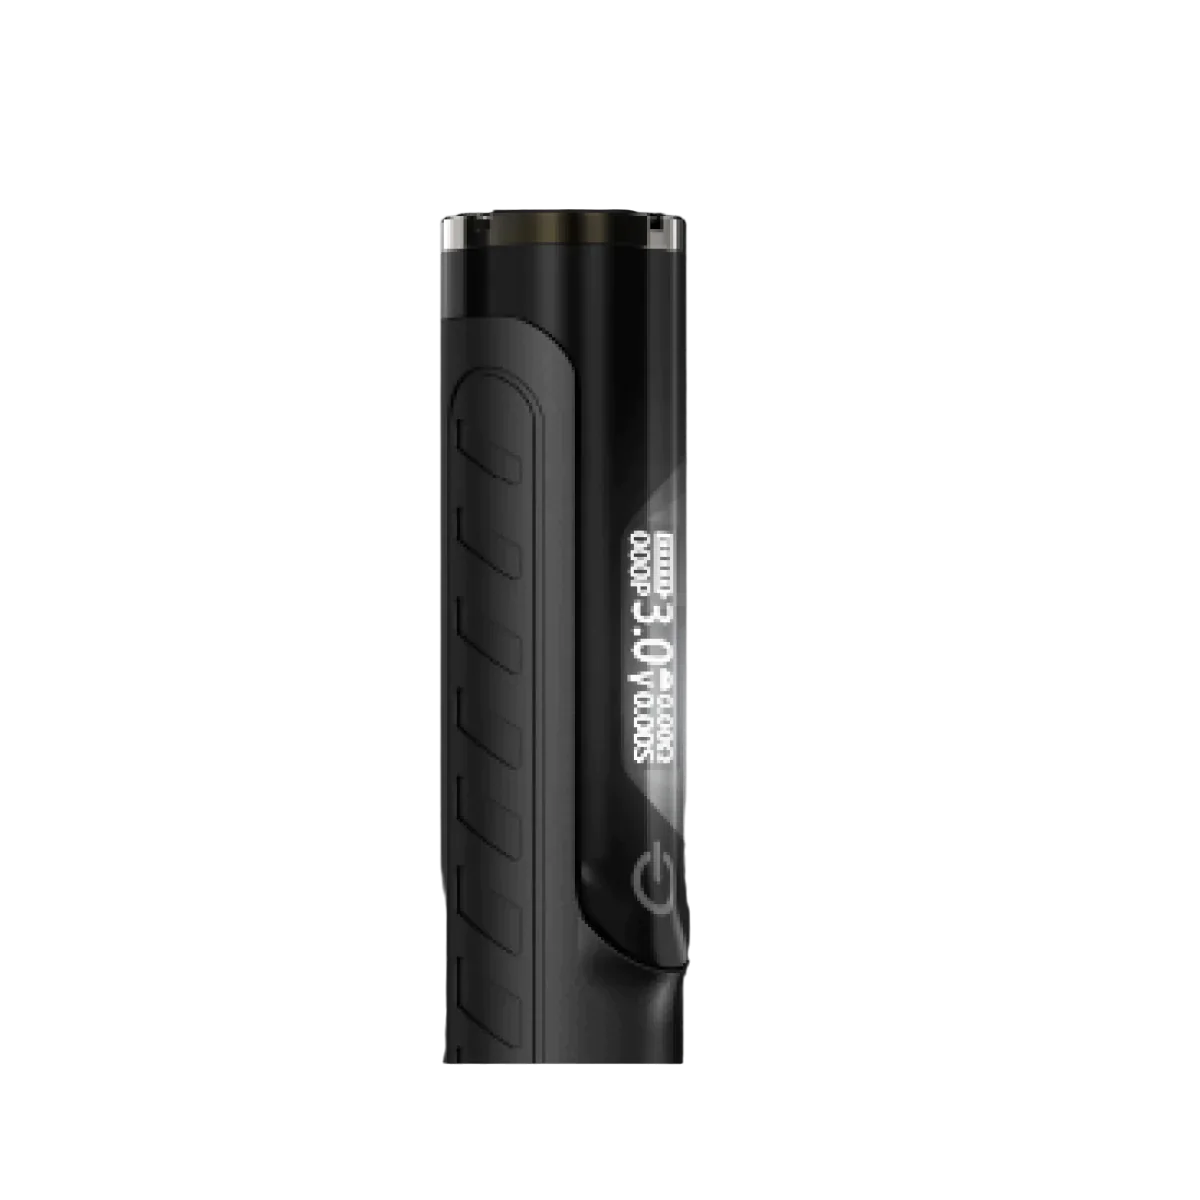 Yocan Black Series - Smart Battery